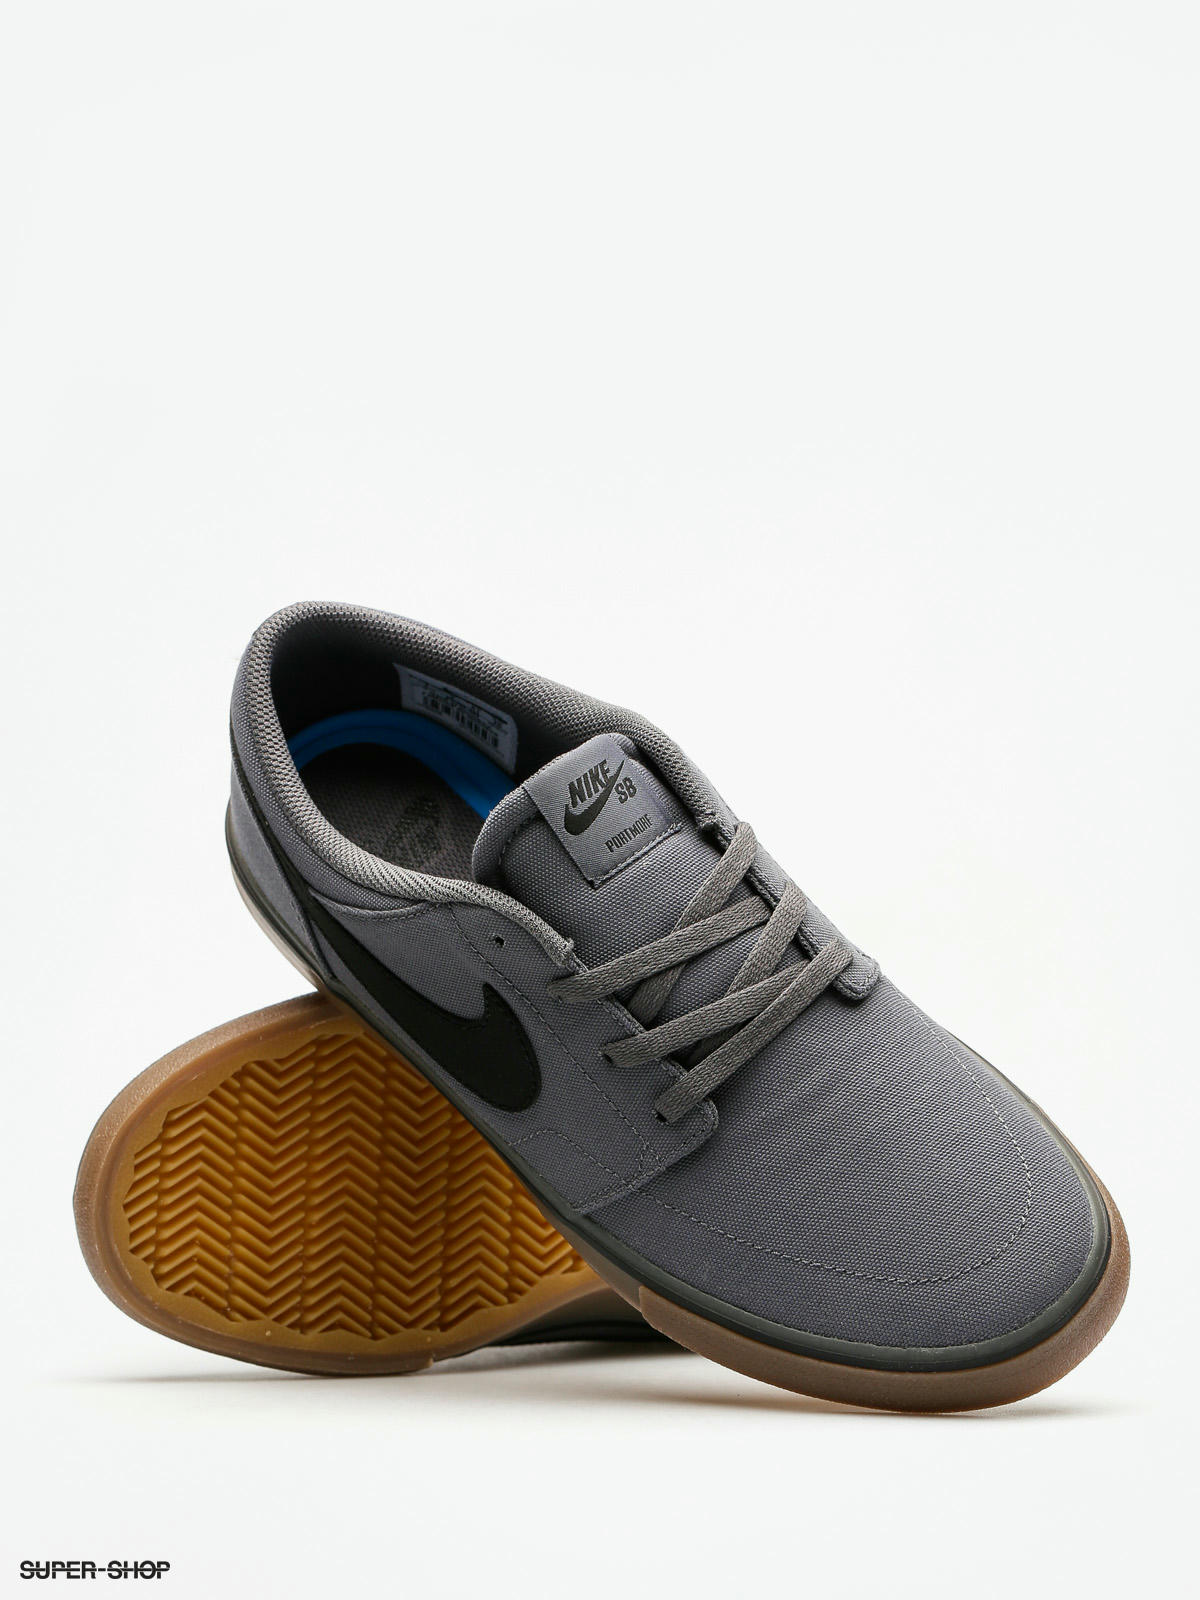 nike sb portmore ii dark grey & gum canvas skate shoes